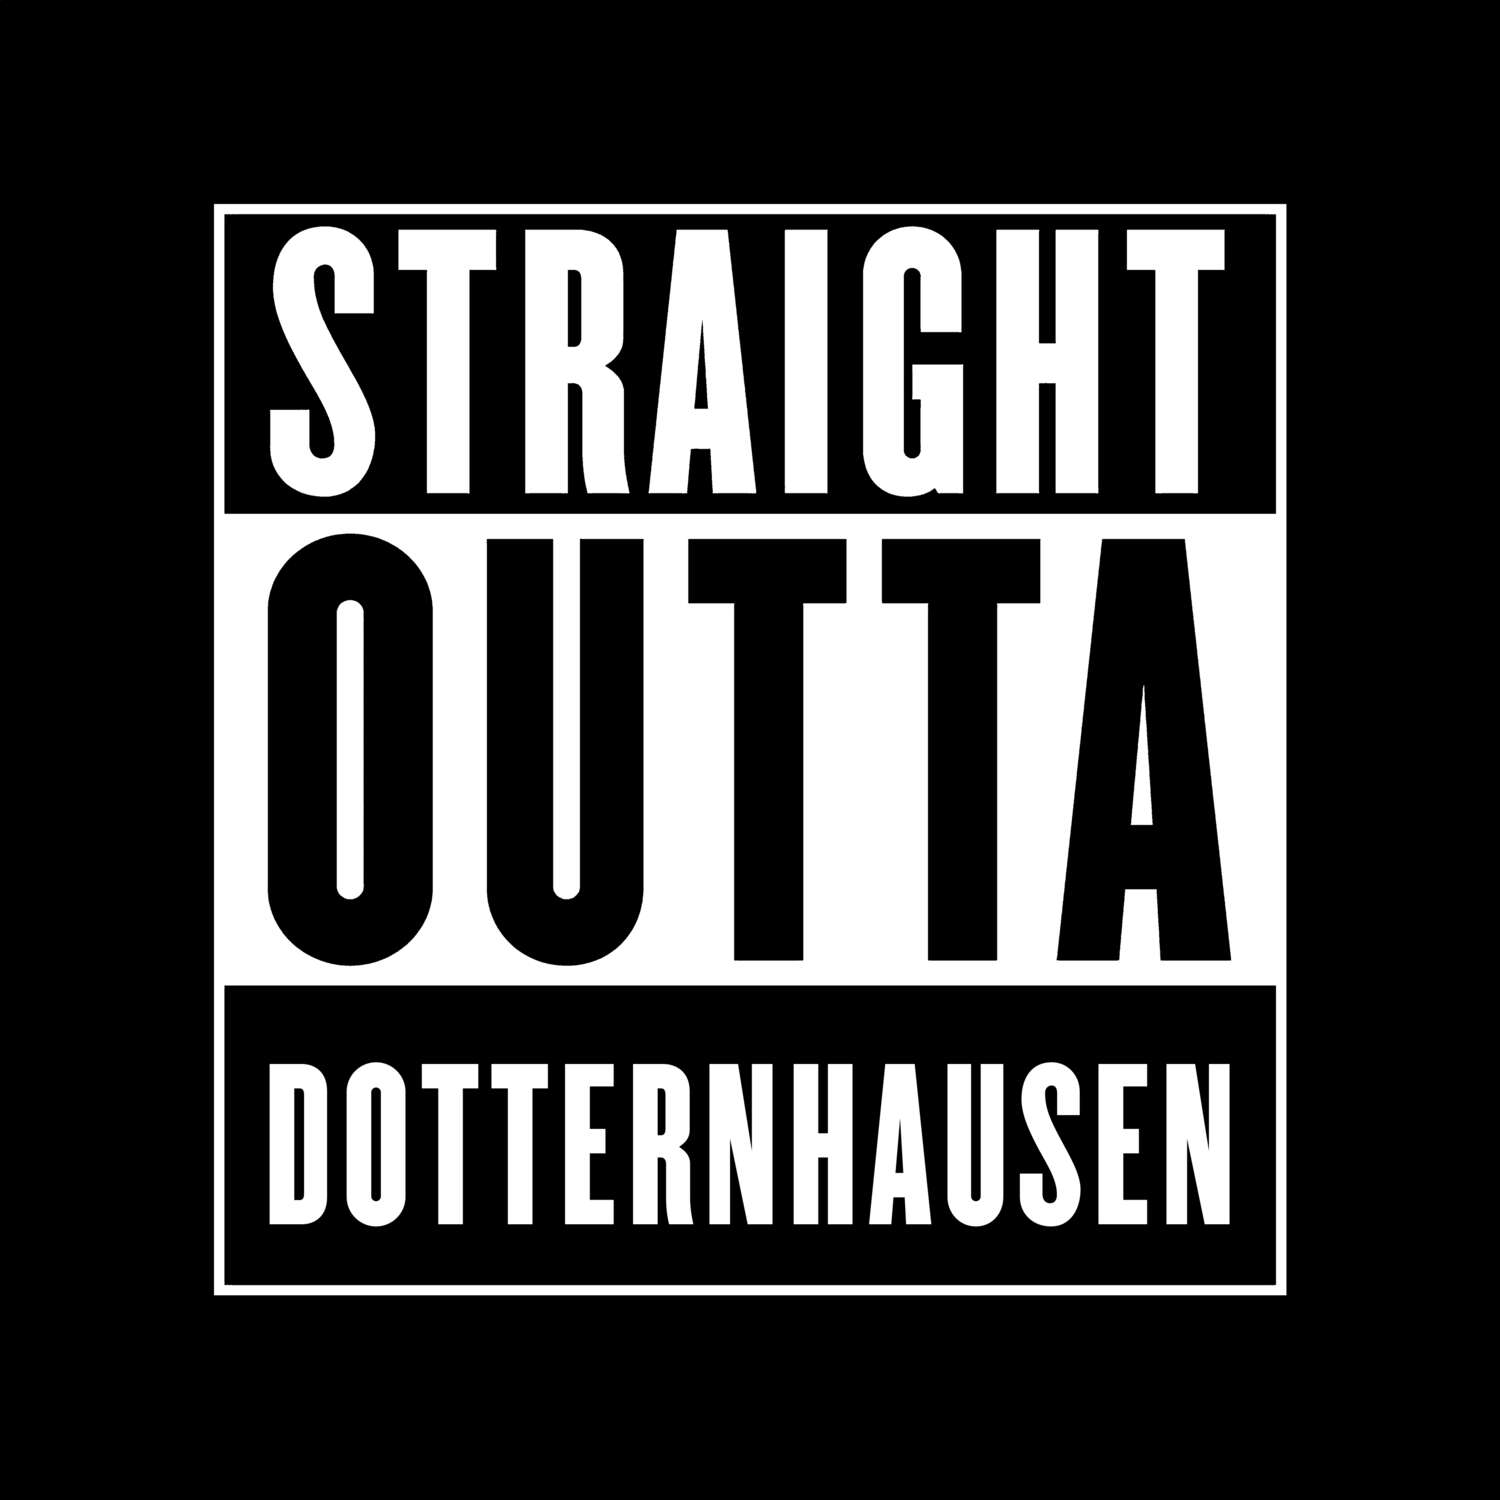 Dotternhausen T-Shirt »Straight Outta«